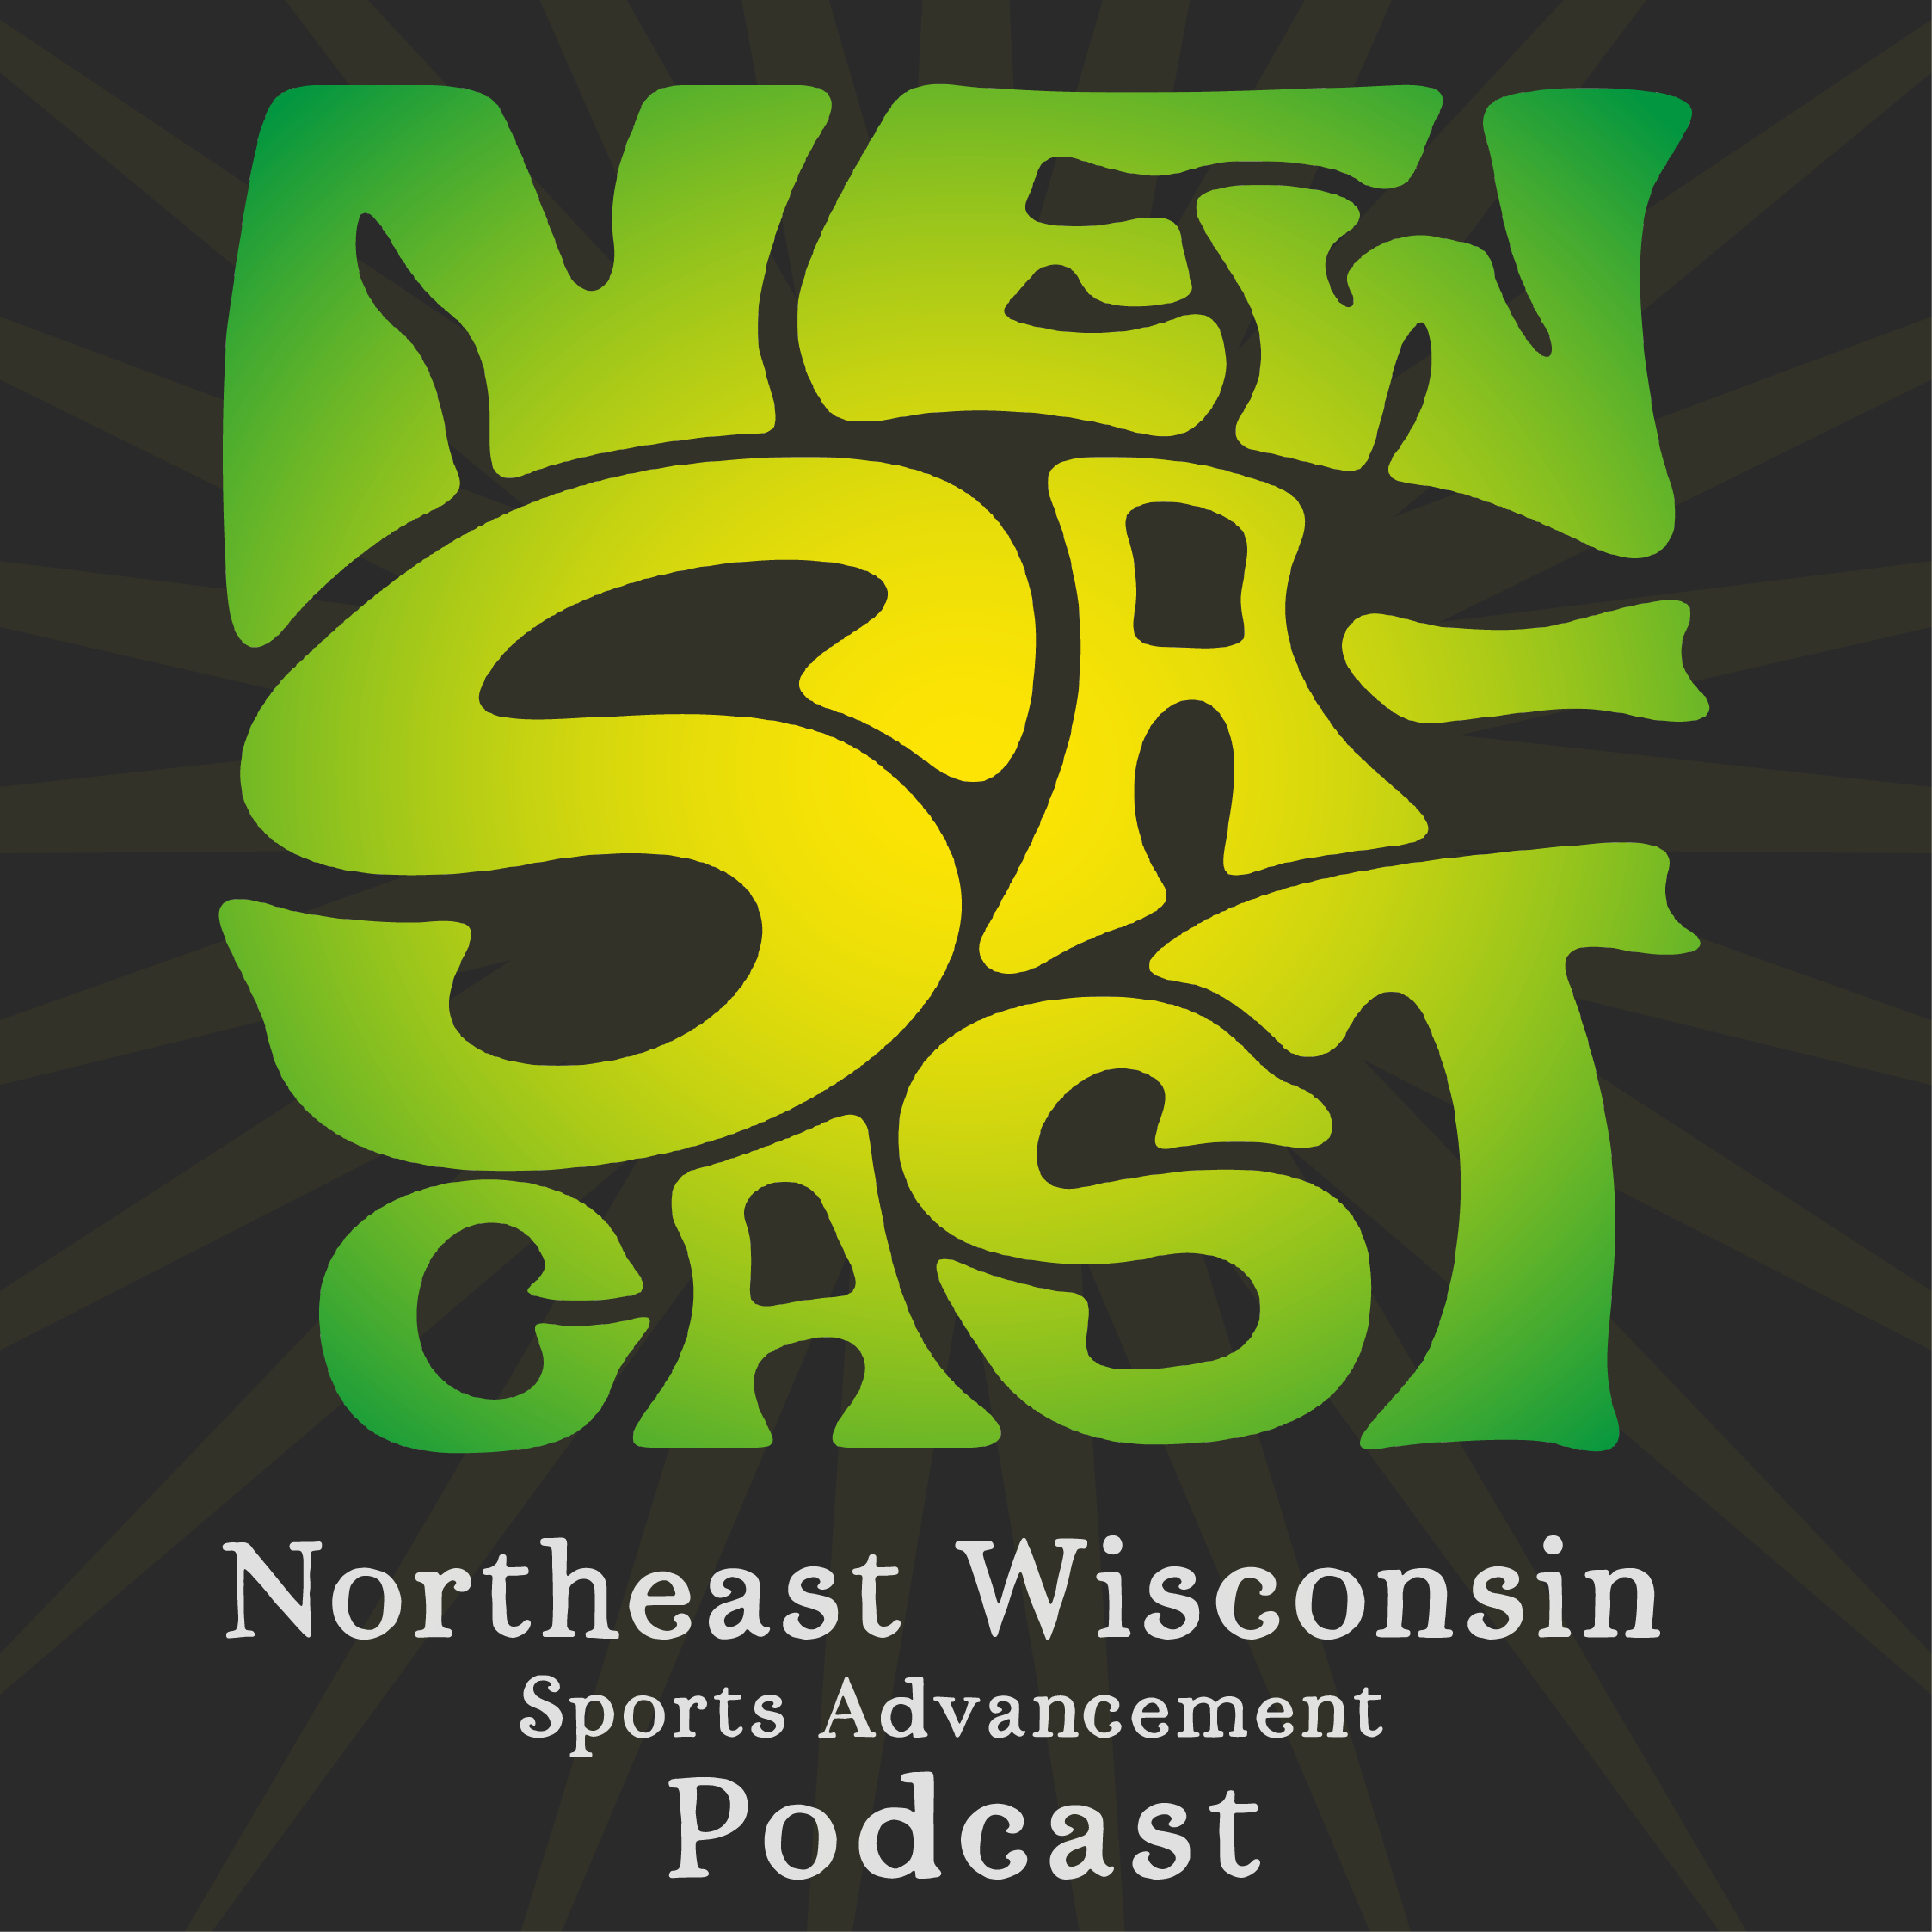 NEWSA-Cast Northeast Wisconsin Sports Advancement Podcast